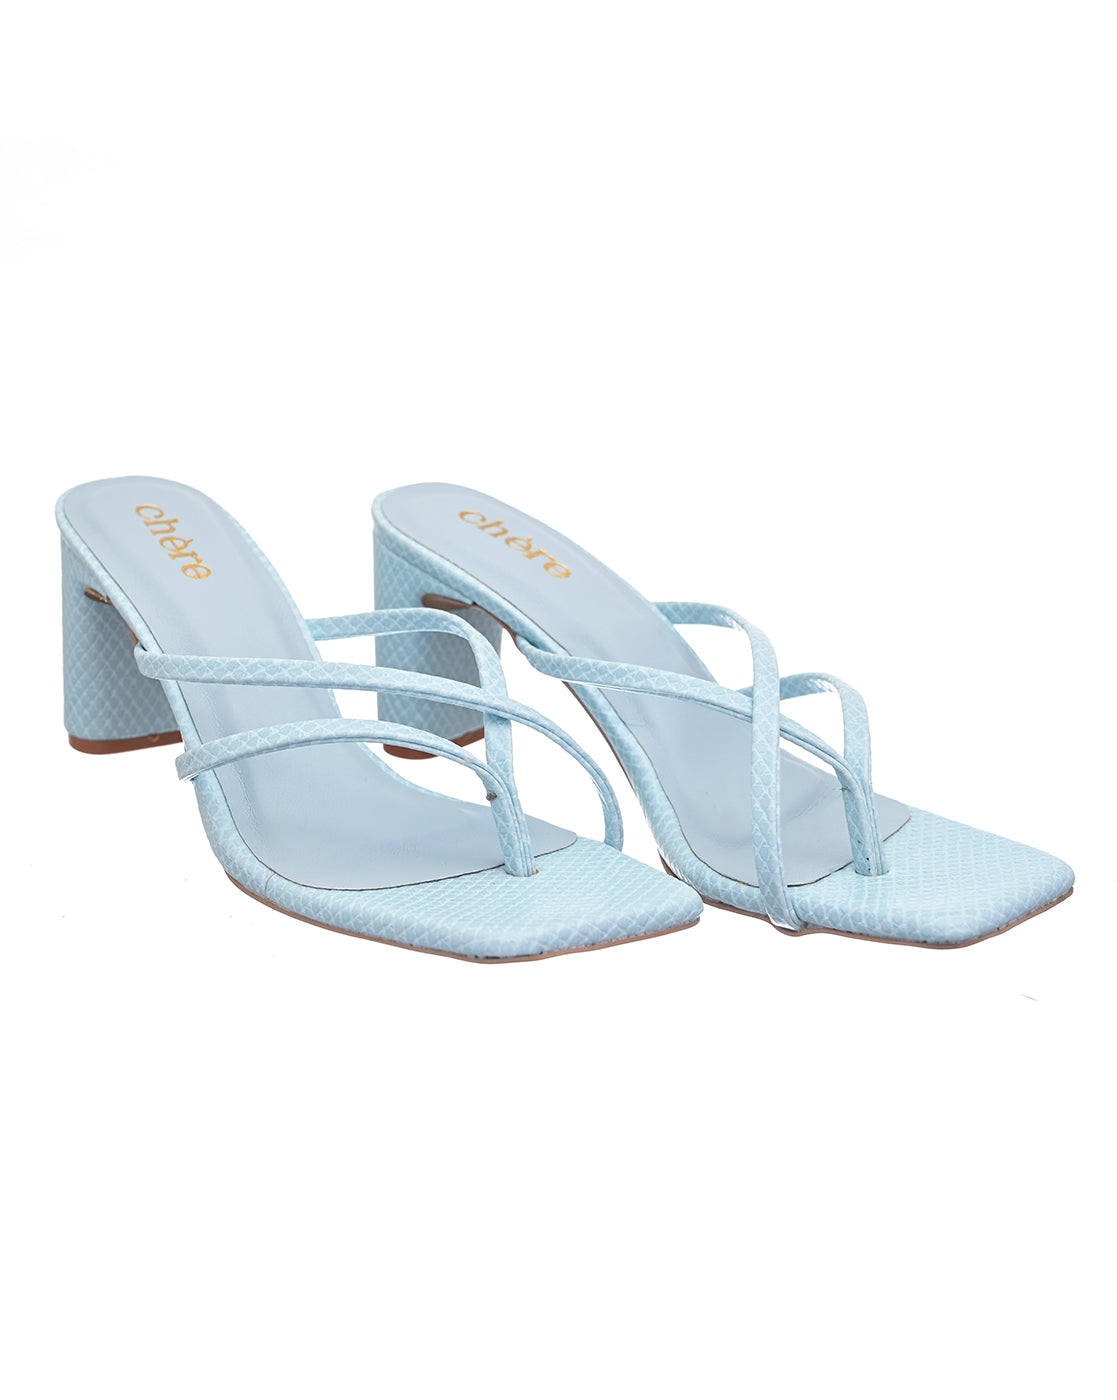 Sky blue strappy block heels